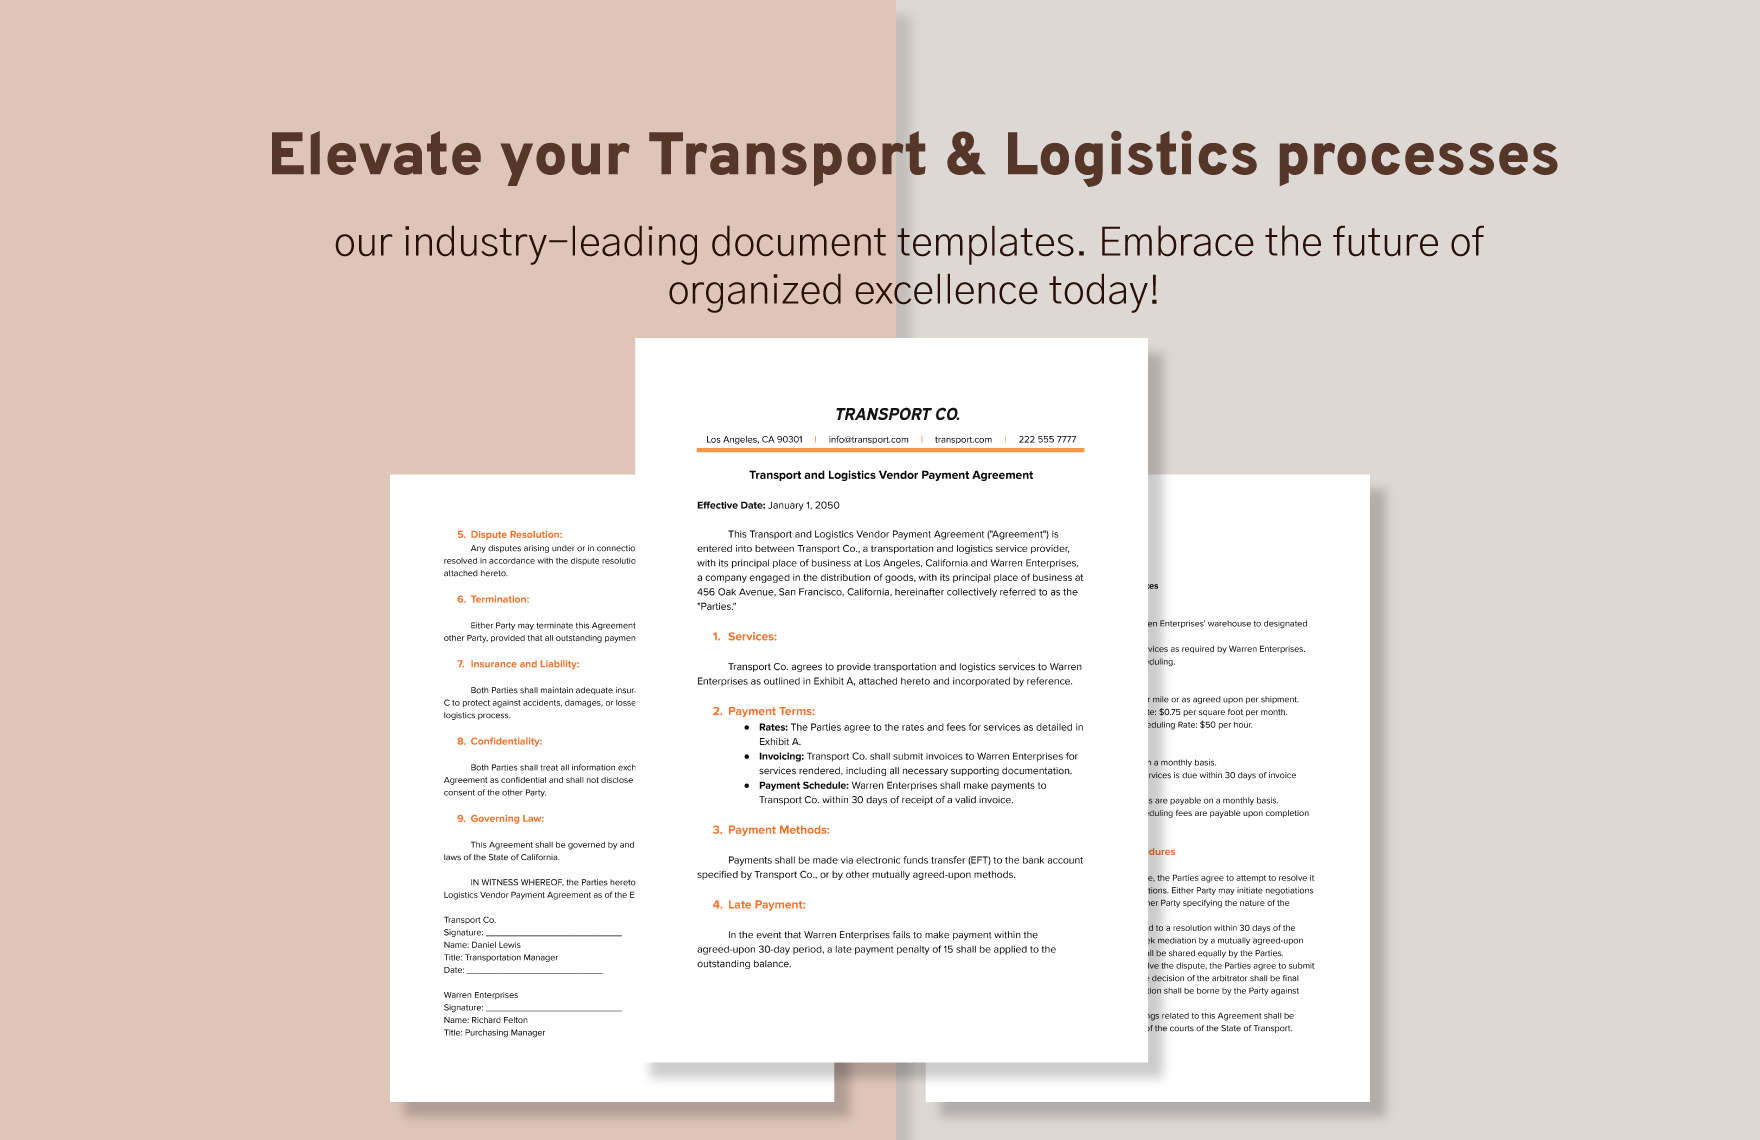 Transport and Logistics Vendor Payment Agreement Template